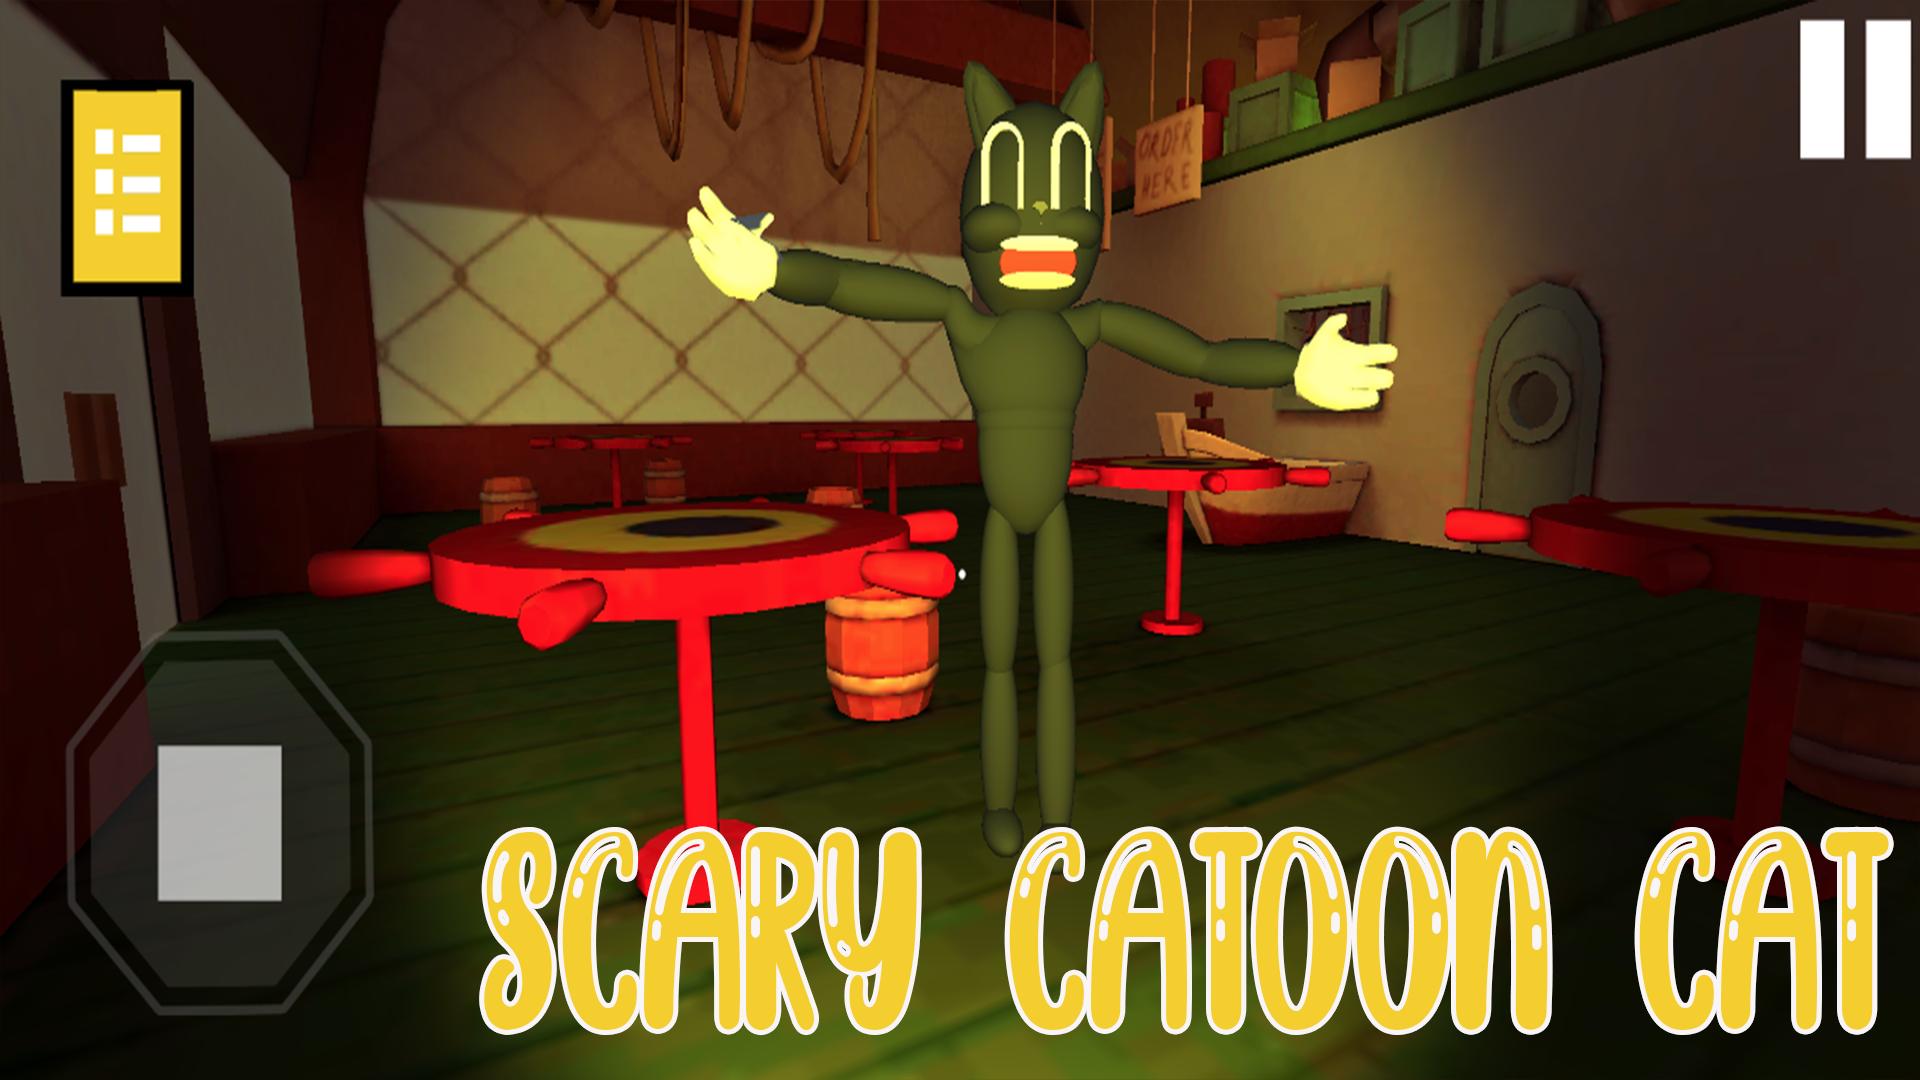 Scary Cartoon Cat Escape Game 1.0 Screenshot 1